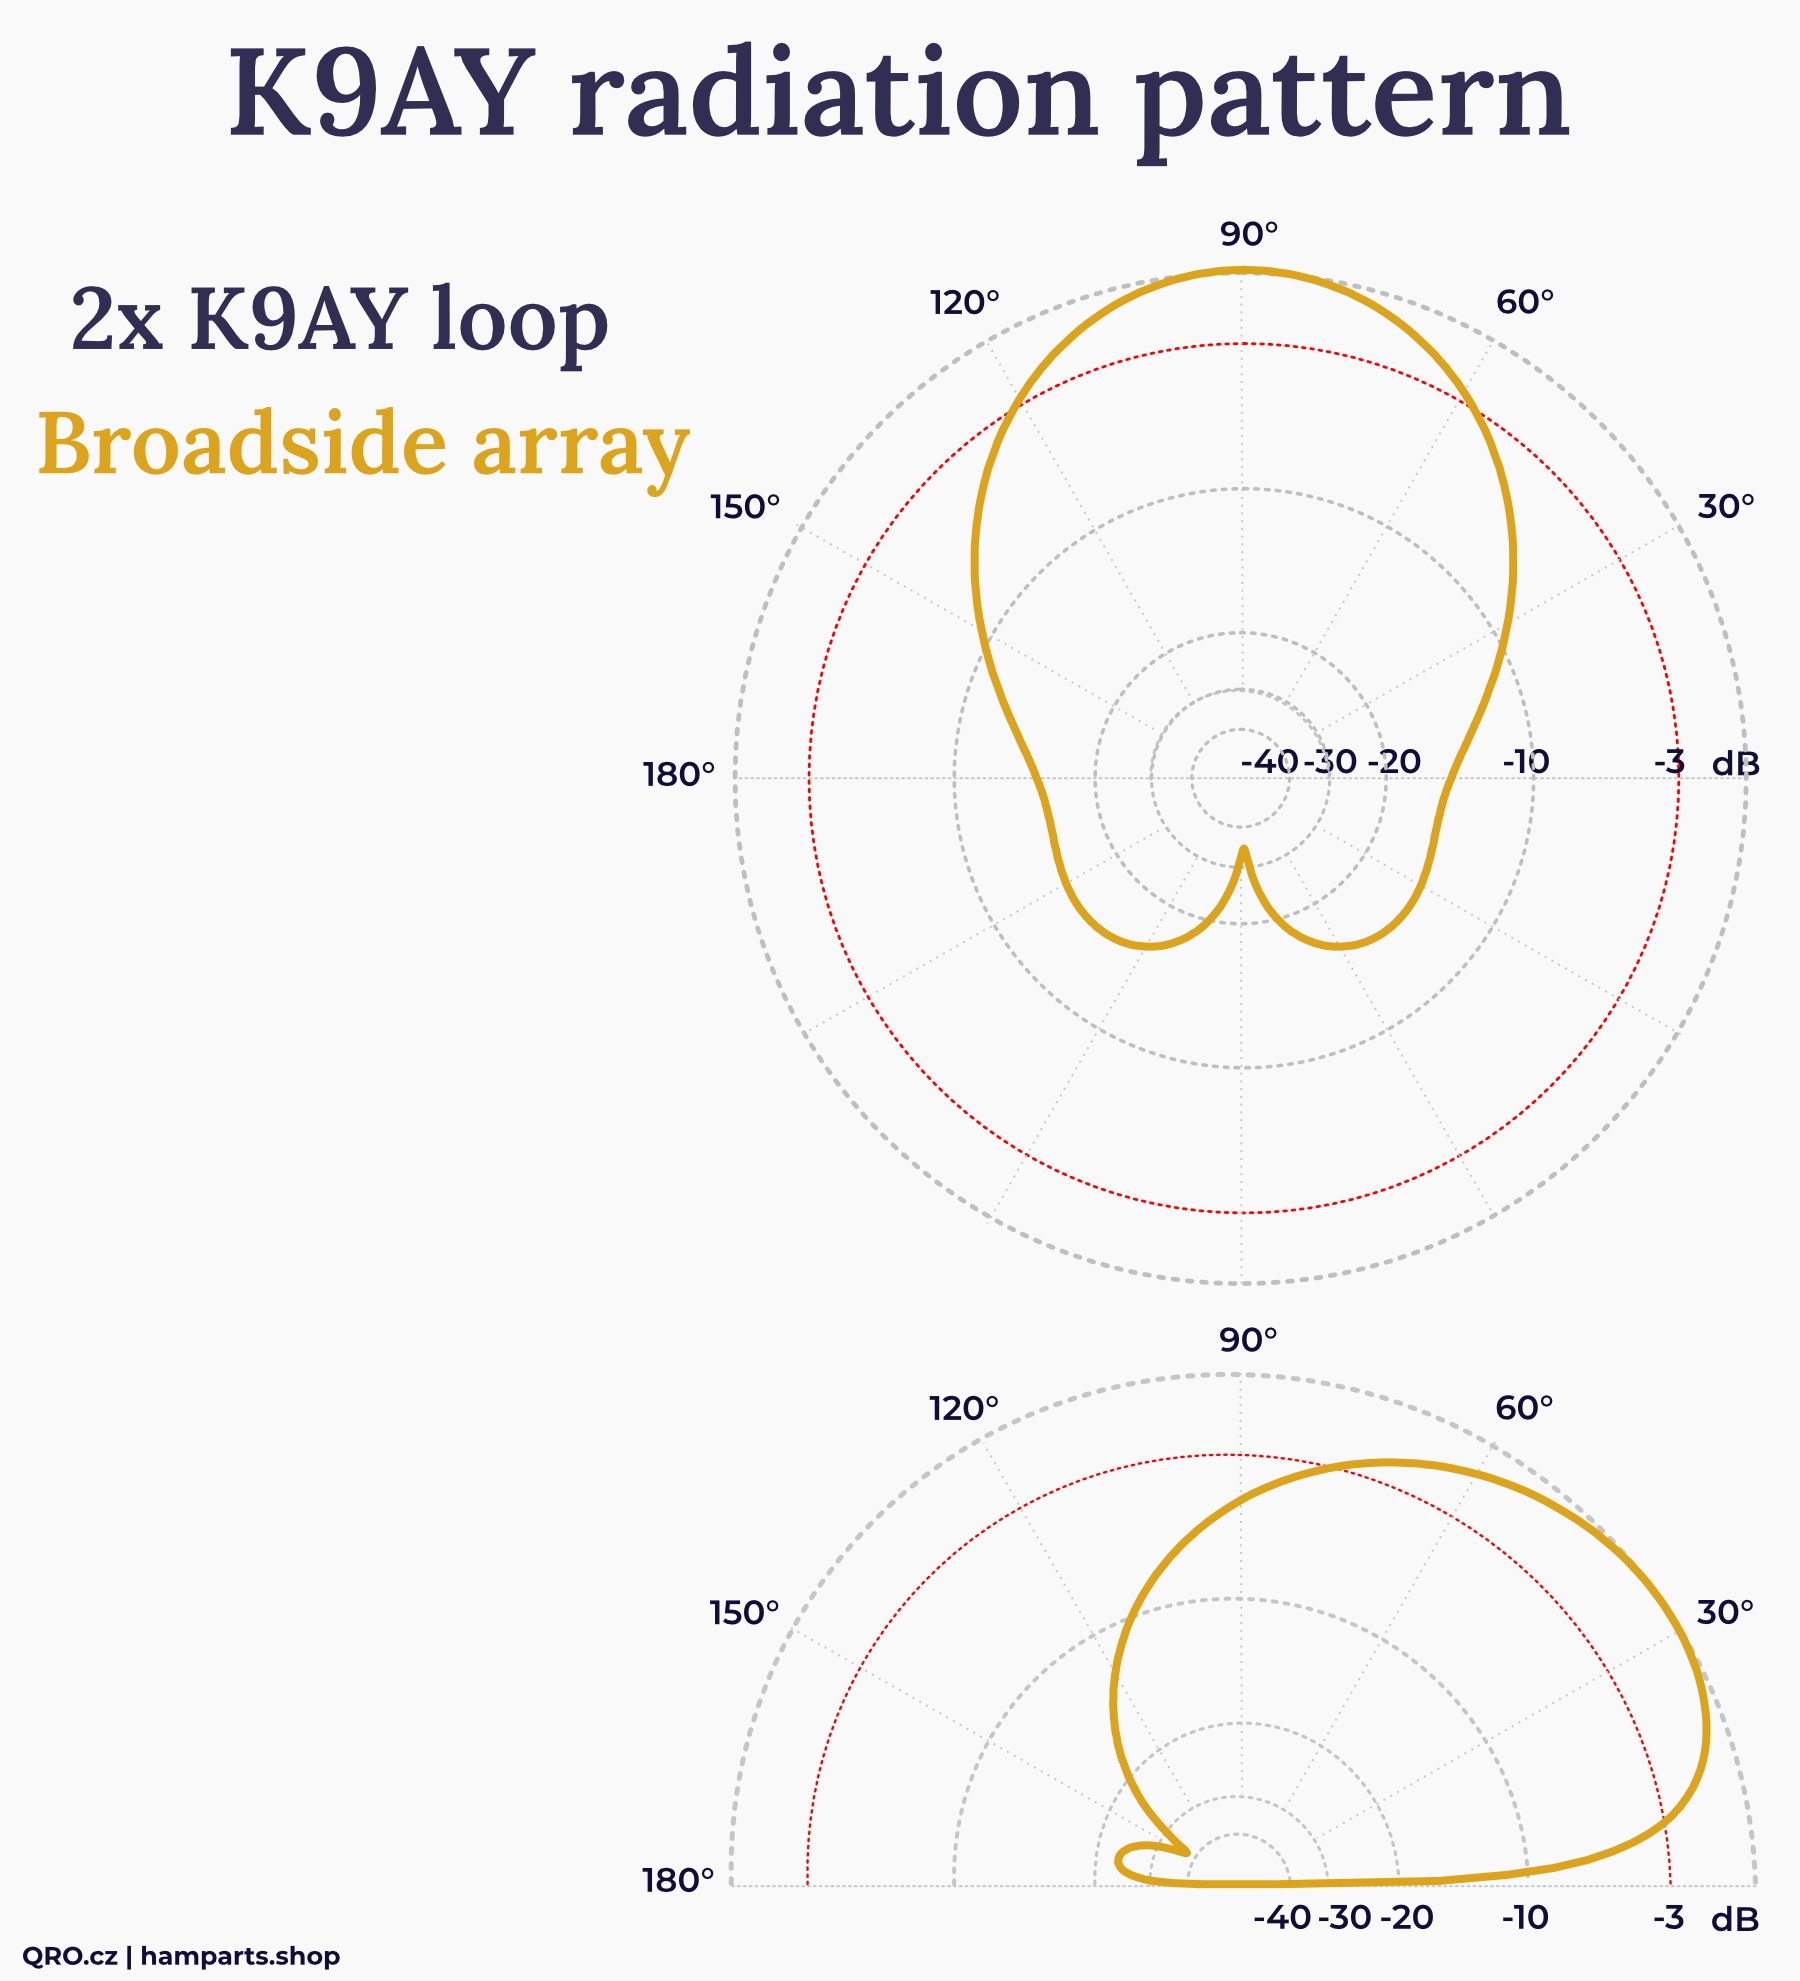 k9ay antenna pattern broadside array by qro.cz hamparts.shop